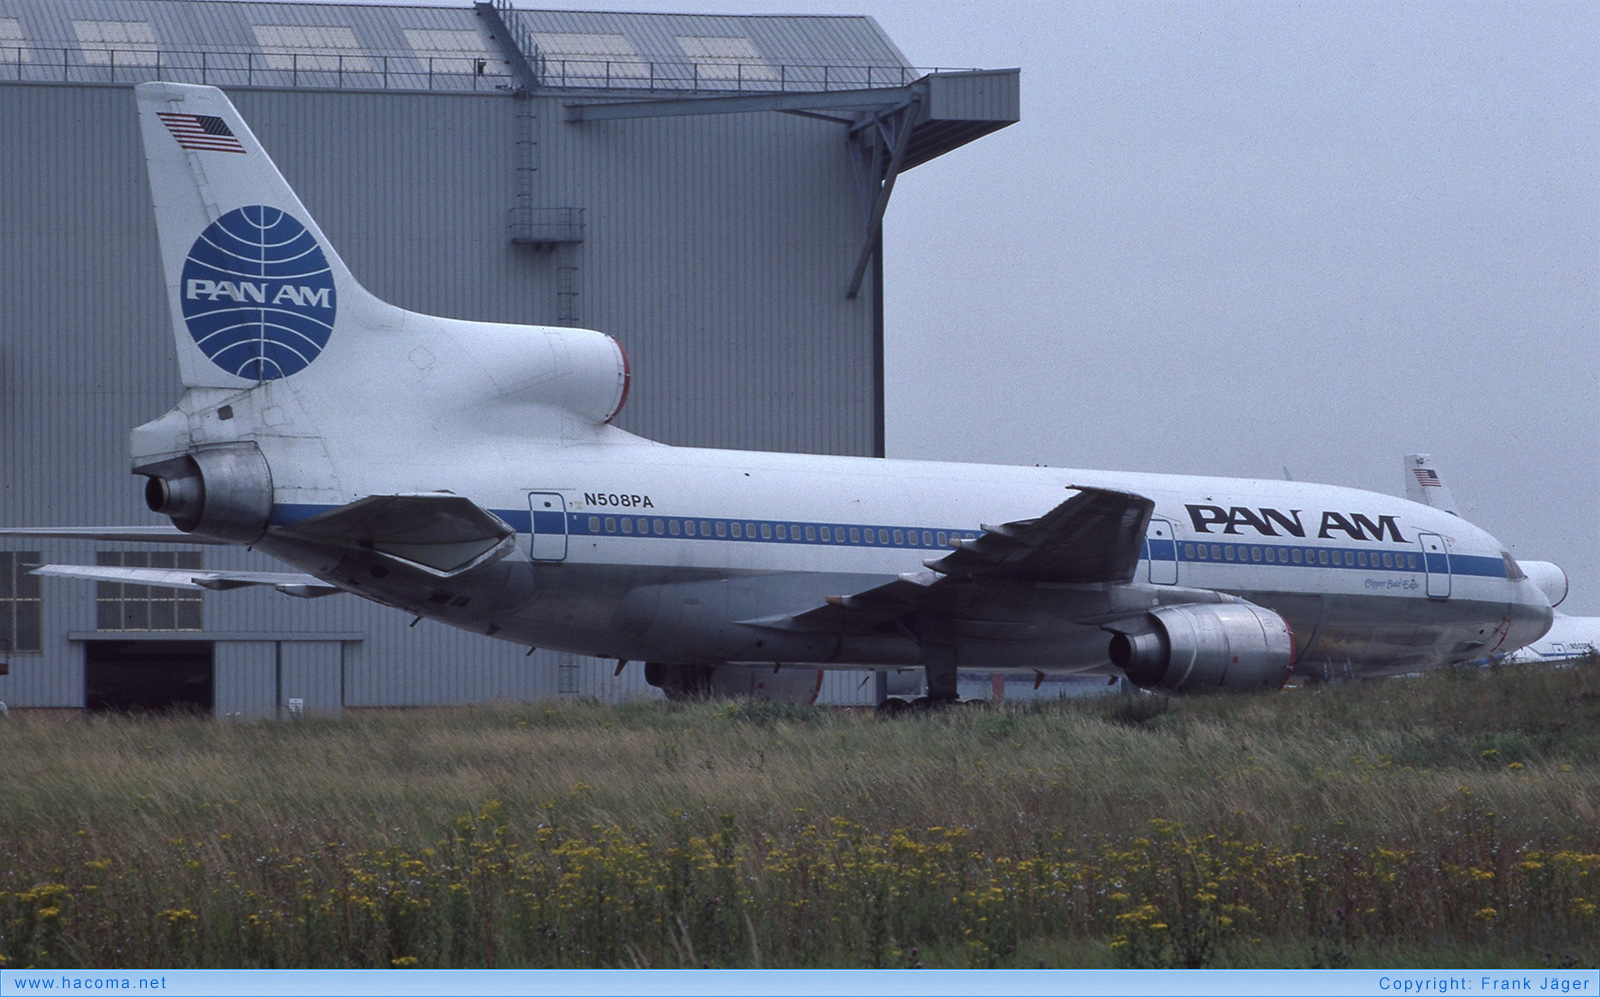 Photo of N508PA - Pan Am Clipper Bald Eagle - Cambridge Airport - Jul 26, 1985